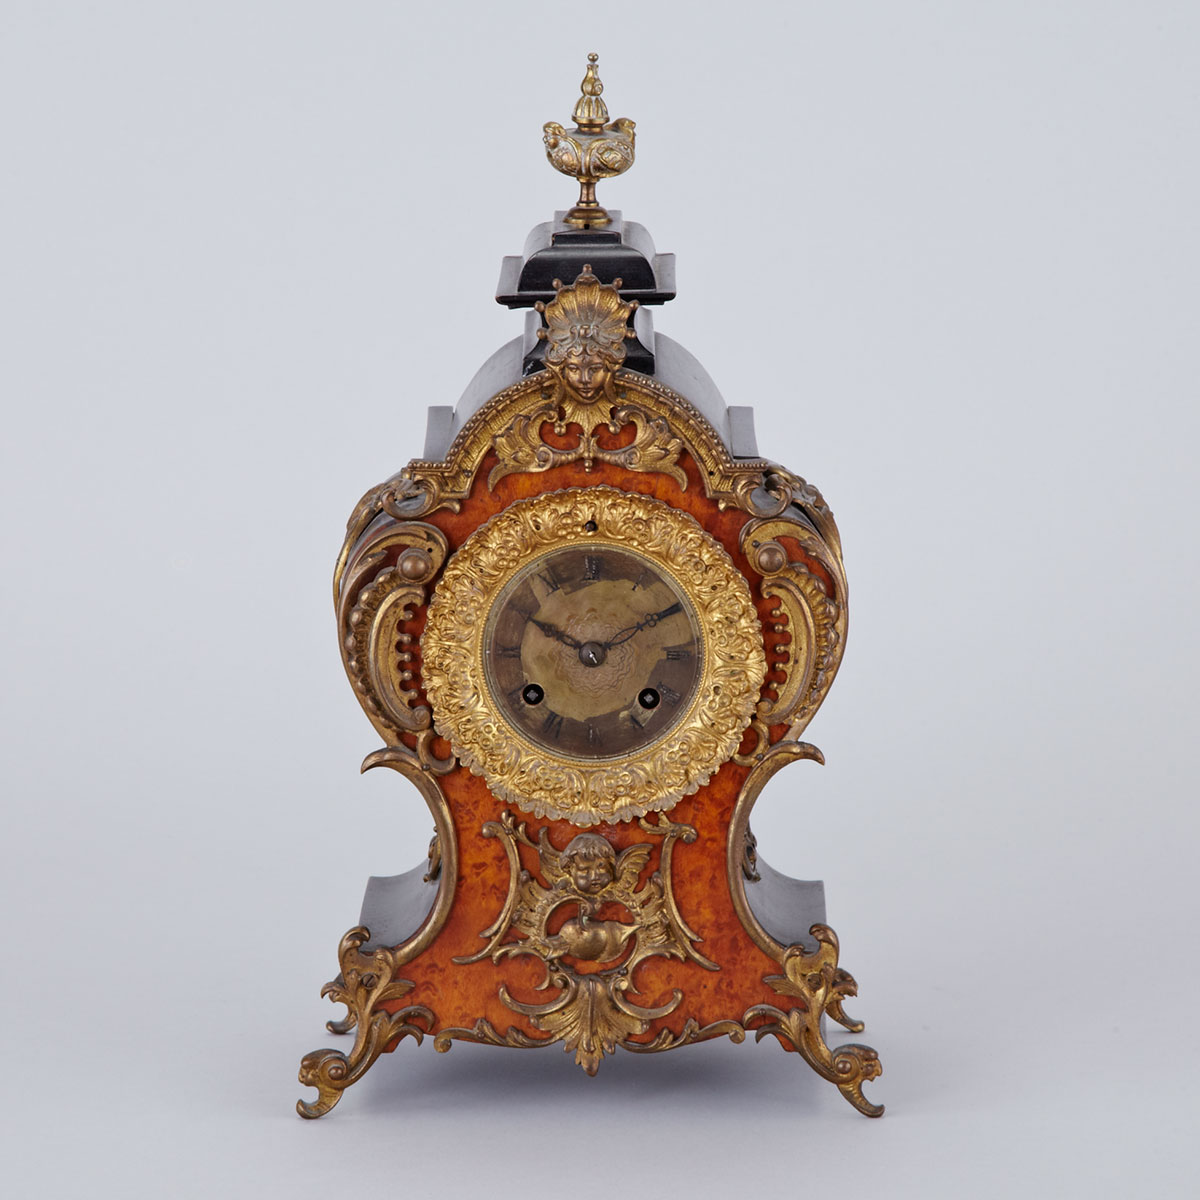 Small French Ormolu Mounted Burl Walnut Bracket Clock, mid 19th century